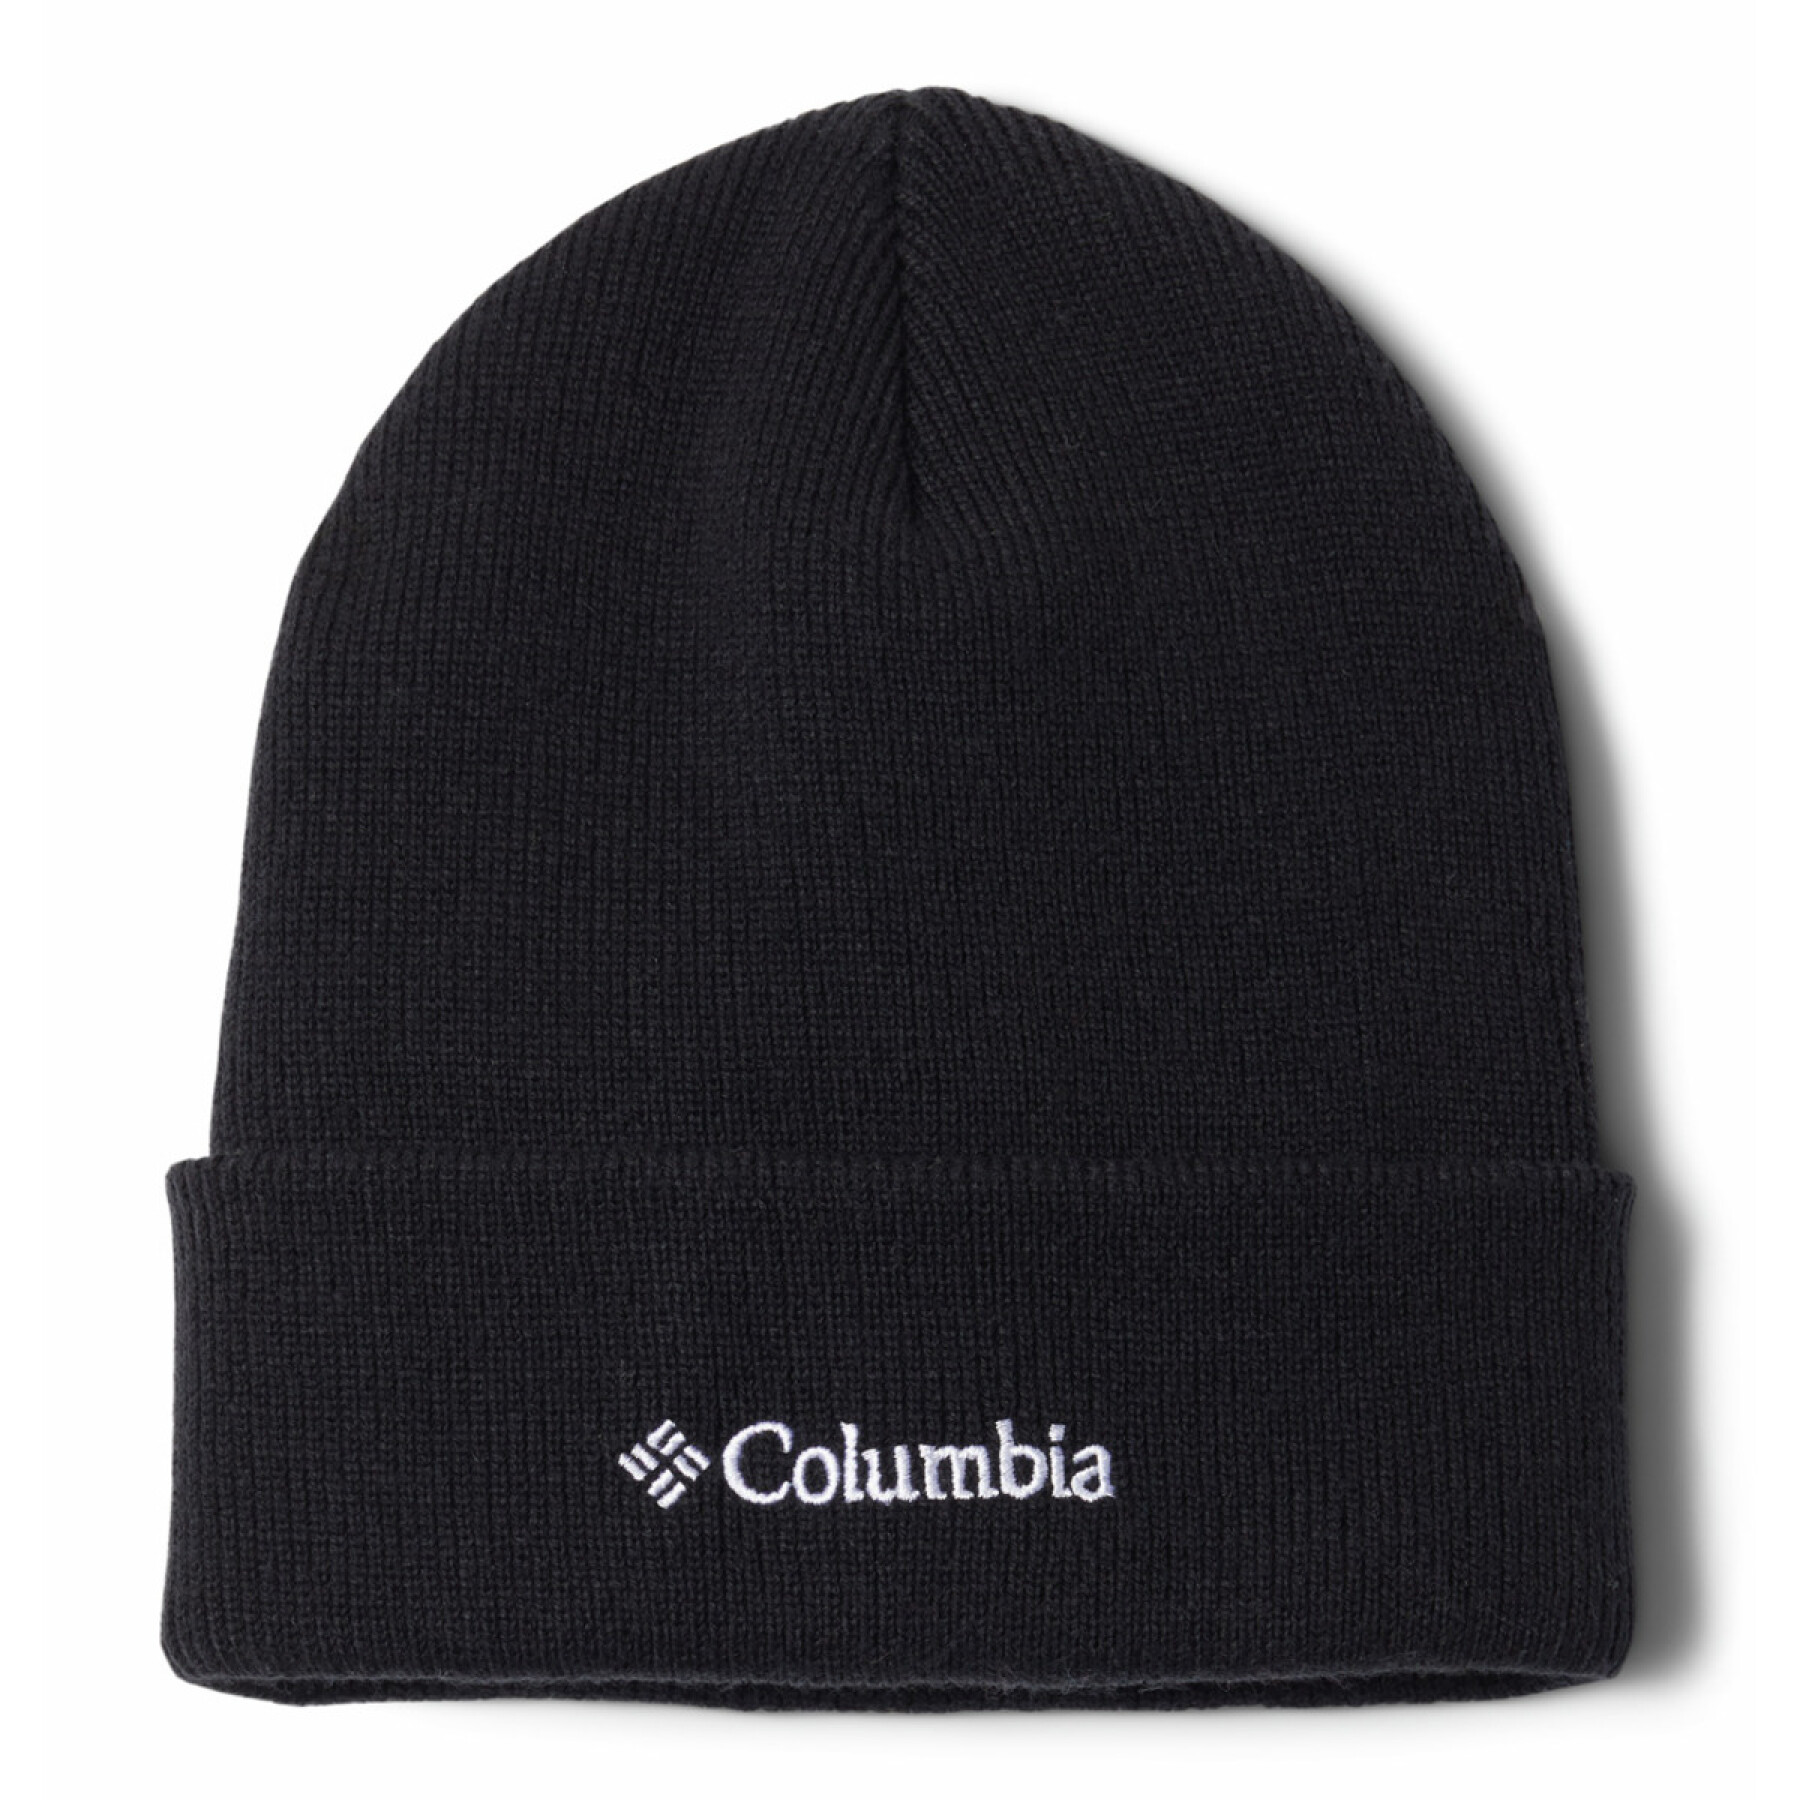 Children's hat Columbia Arctic Blast Youth Heavyweight